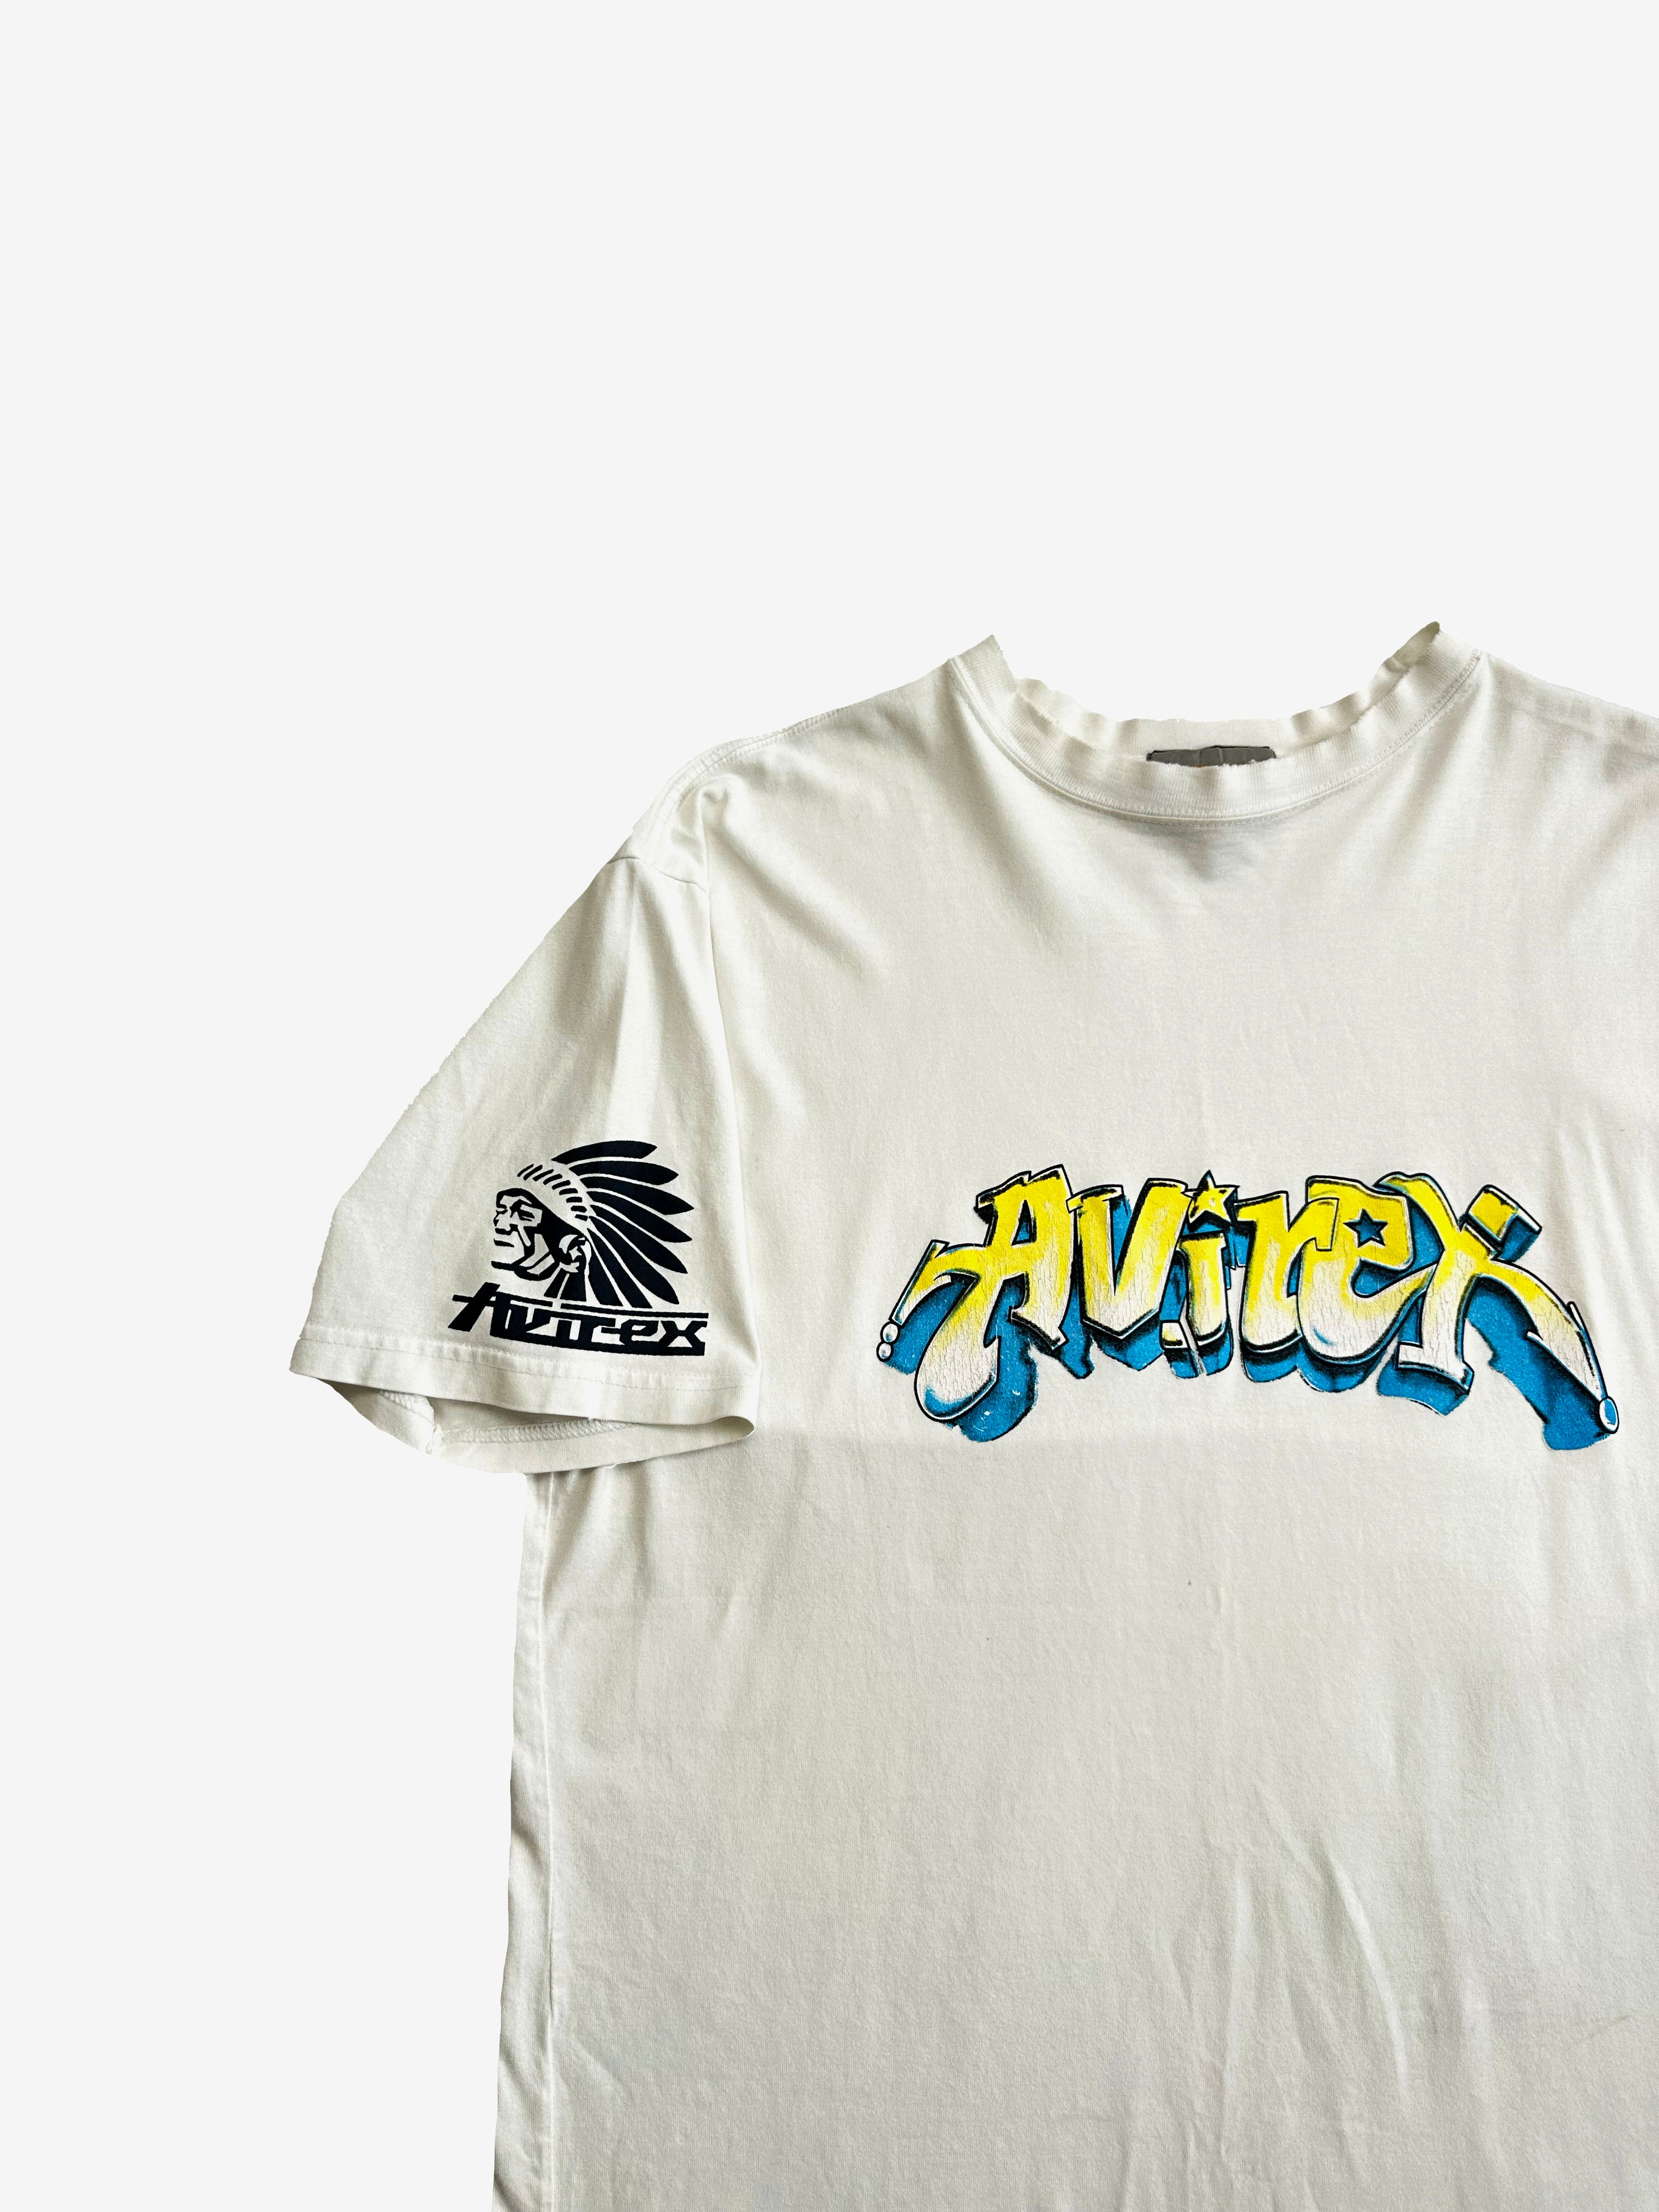 Avirex Graffiti Logo T-shirt 90's